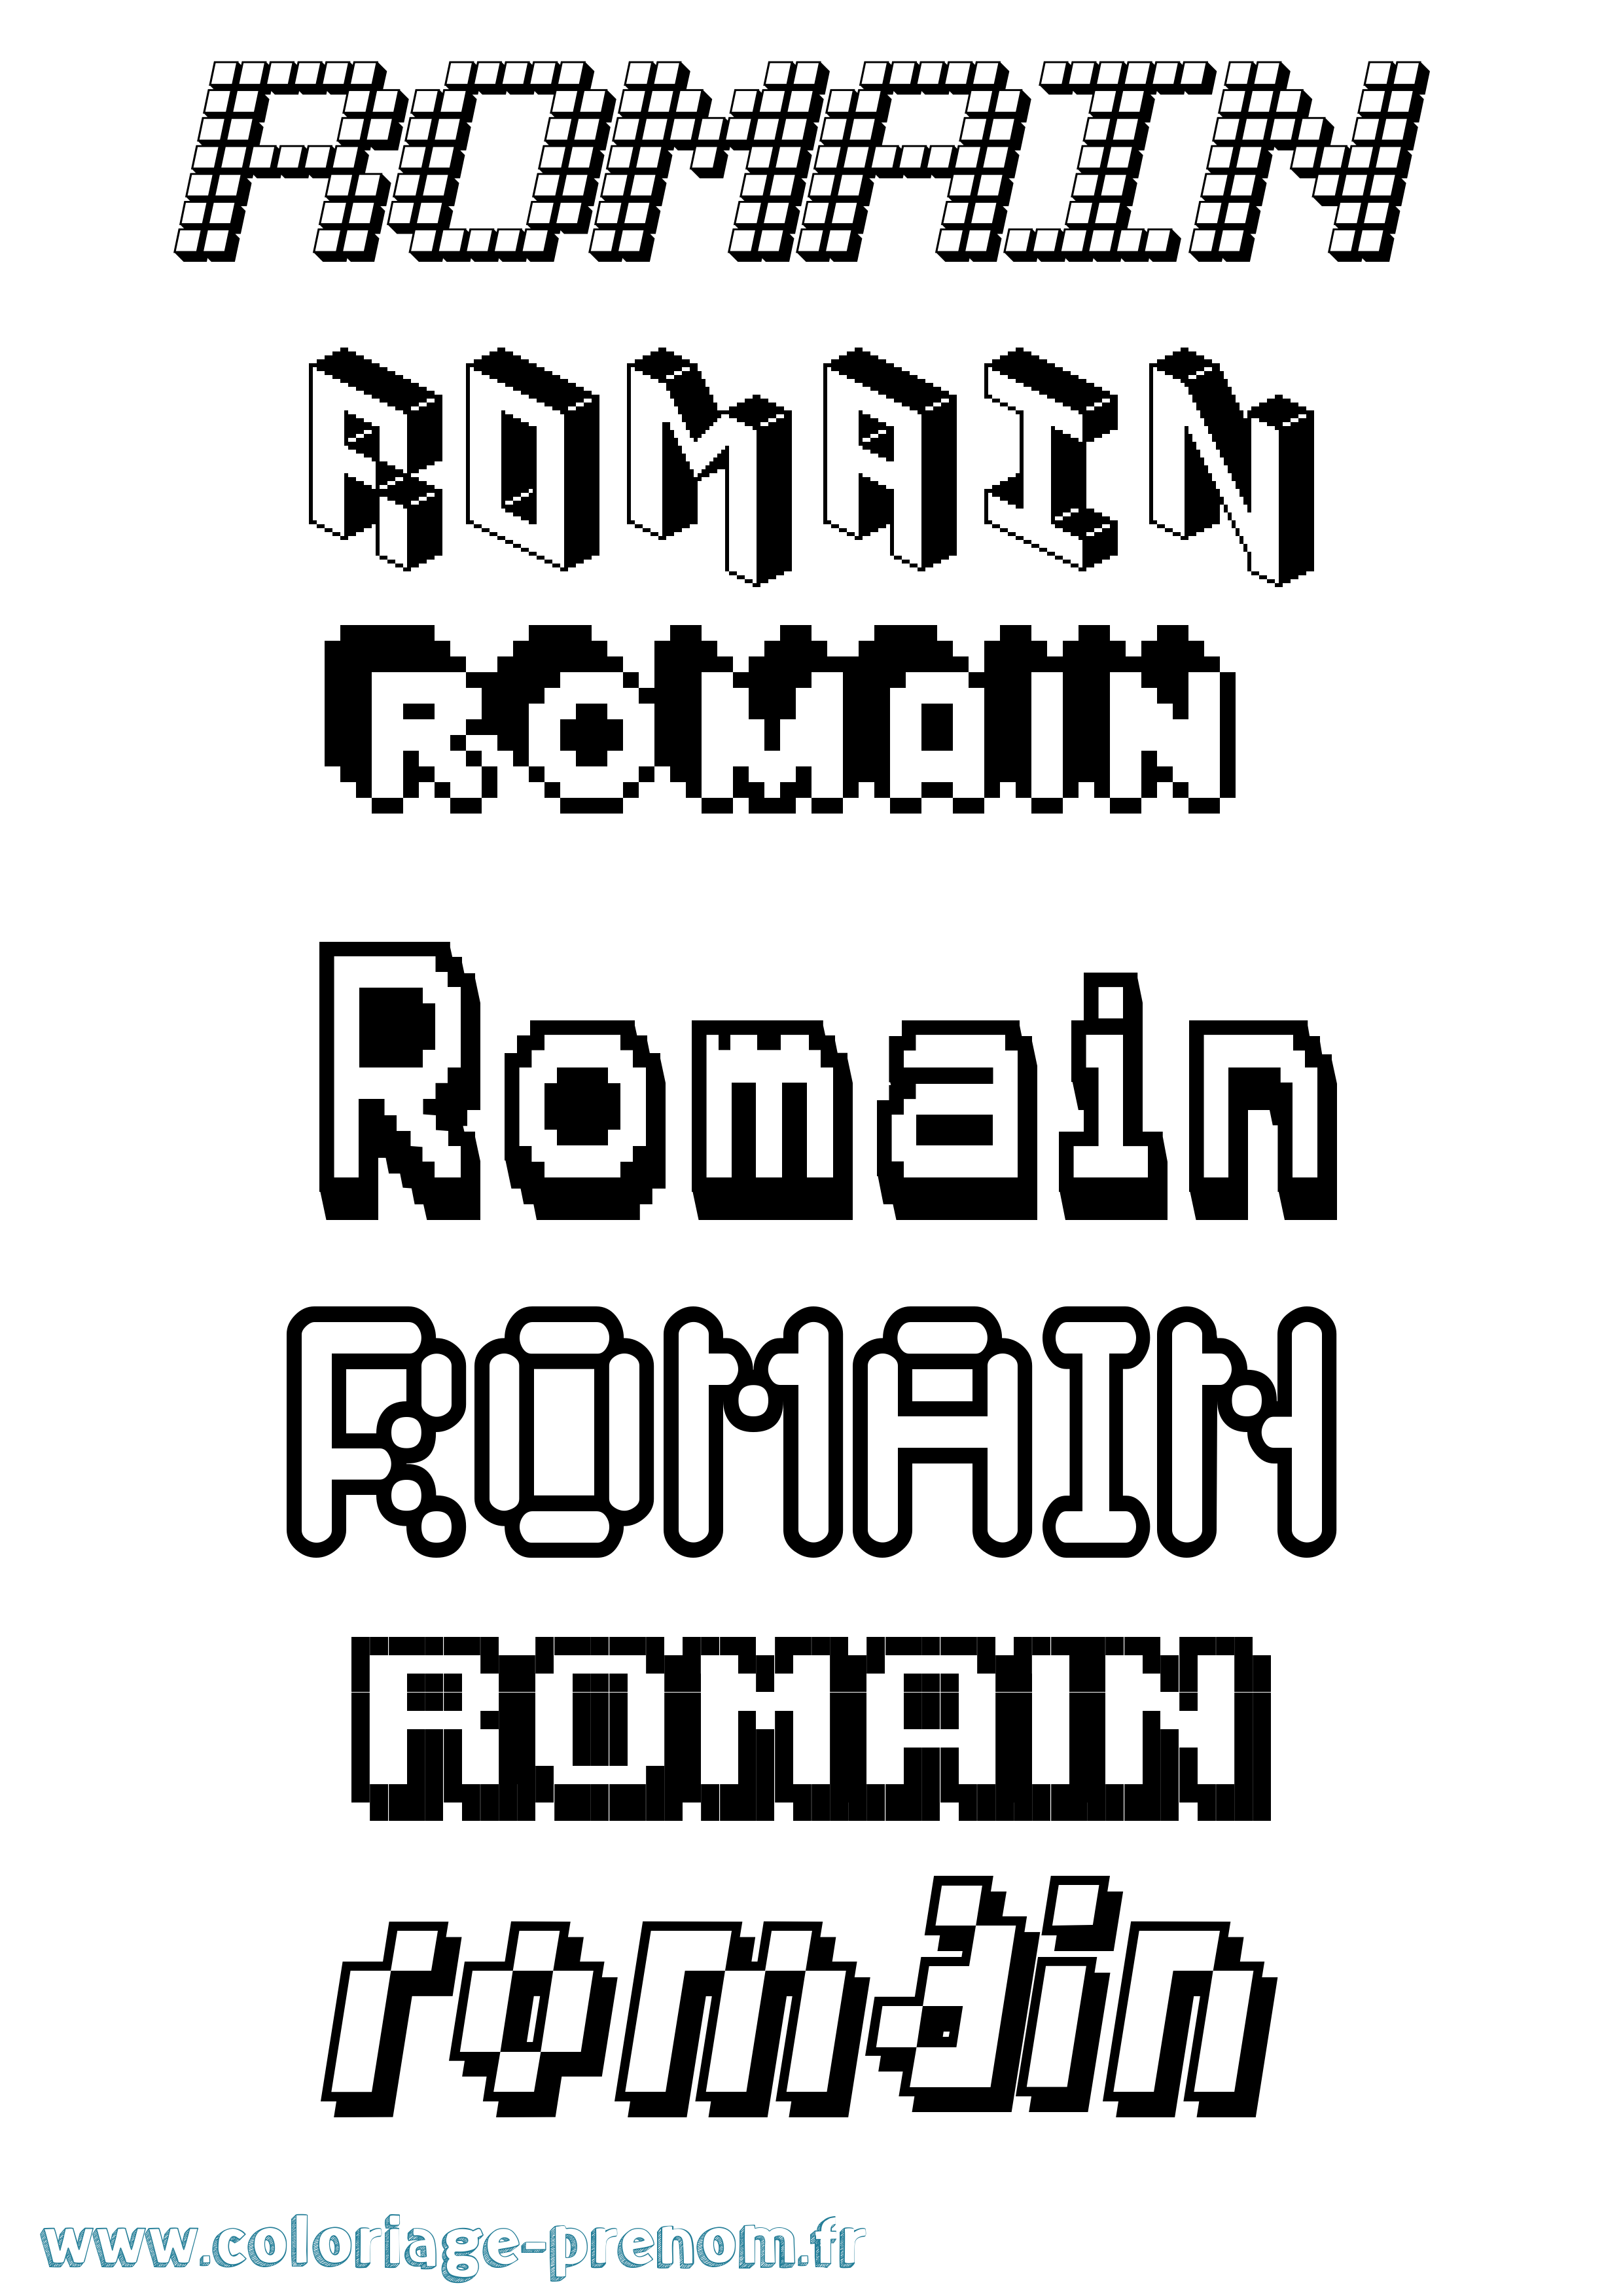 Coloriage prénom Romain Pixel